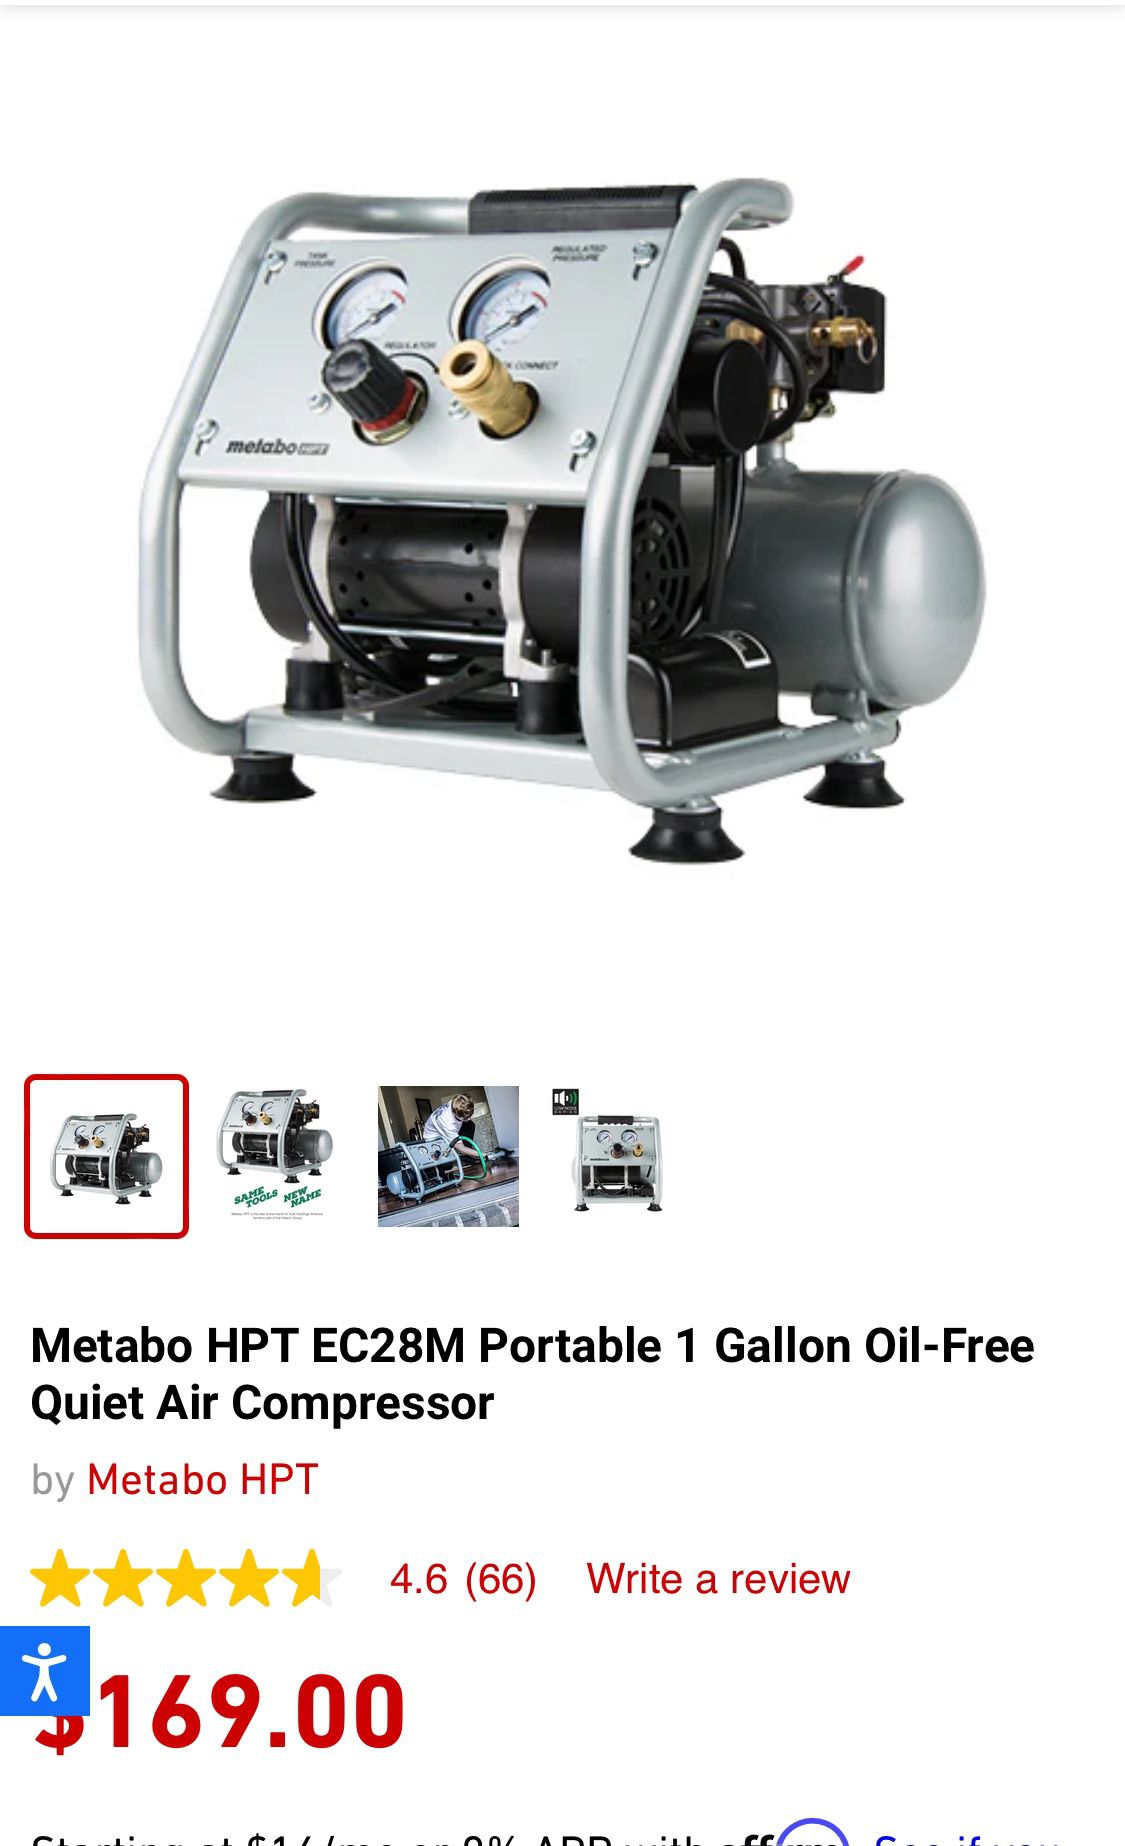 Metabo HPT EC28M Portable 1 Gallon Oil-Free Quiet Air Compressor